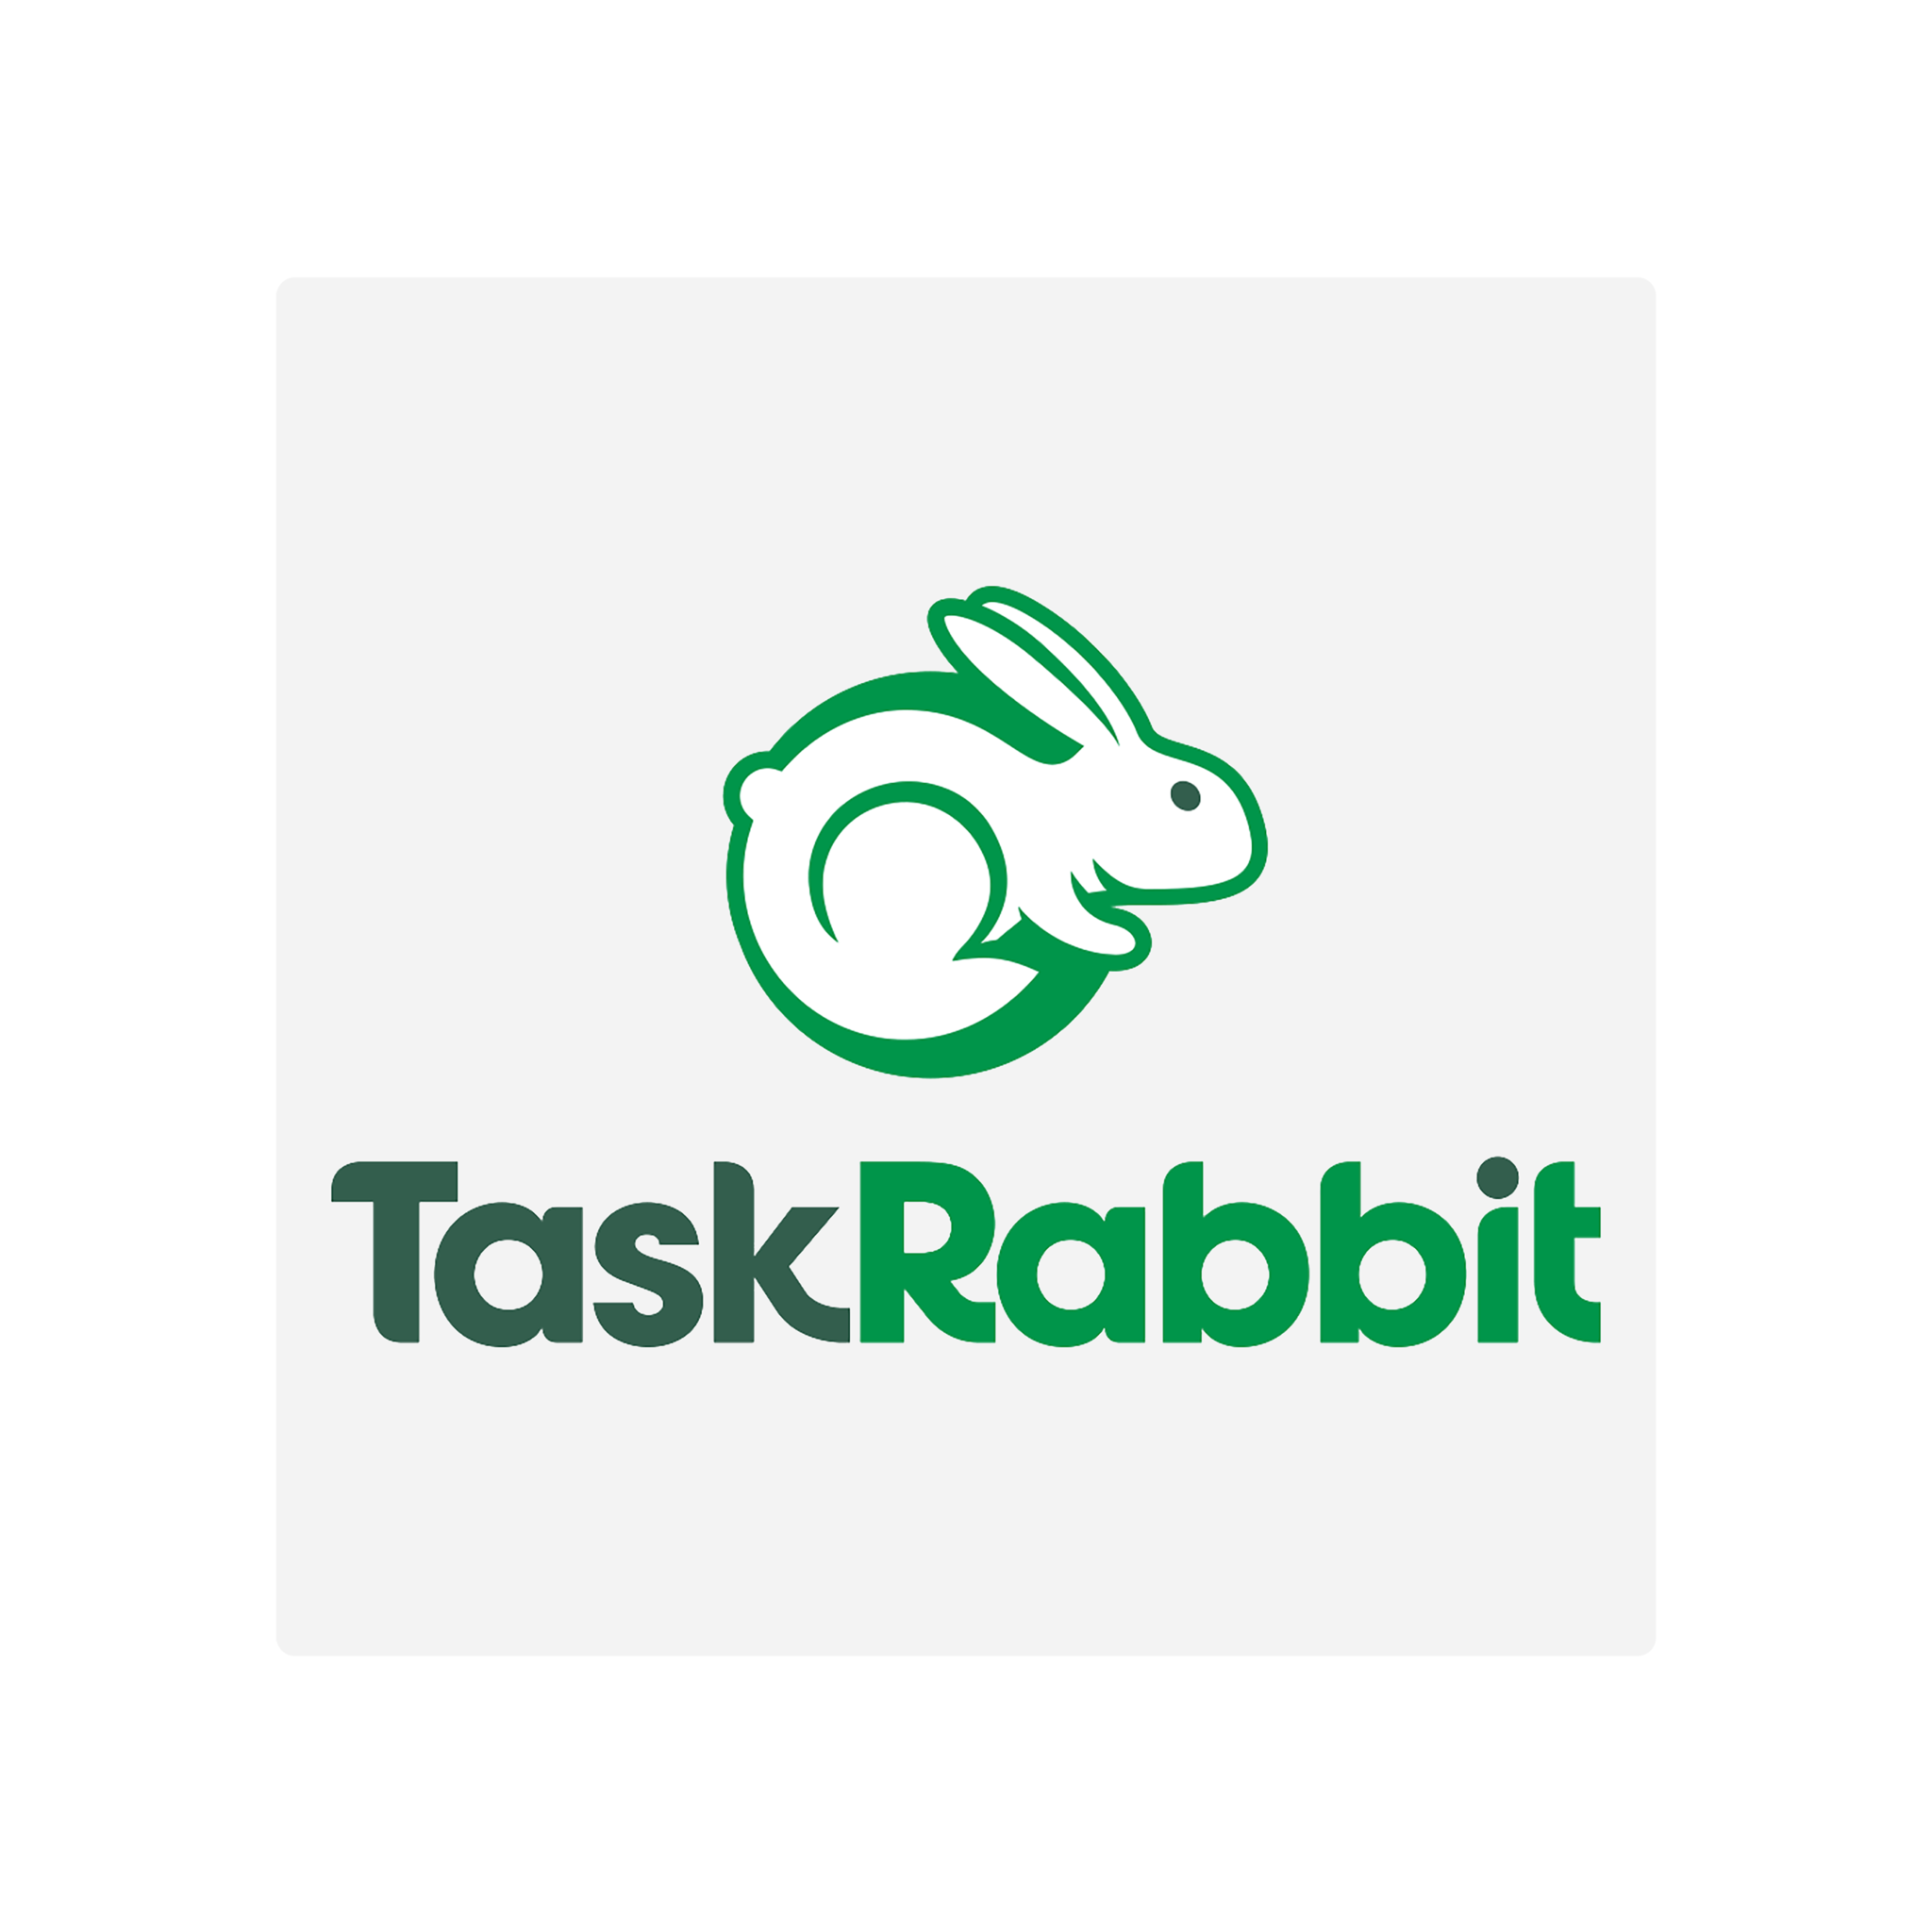 Task Rabbit app logo